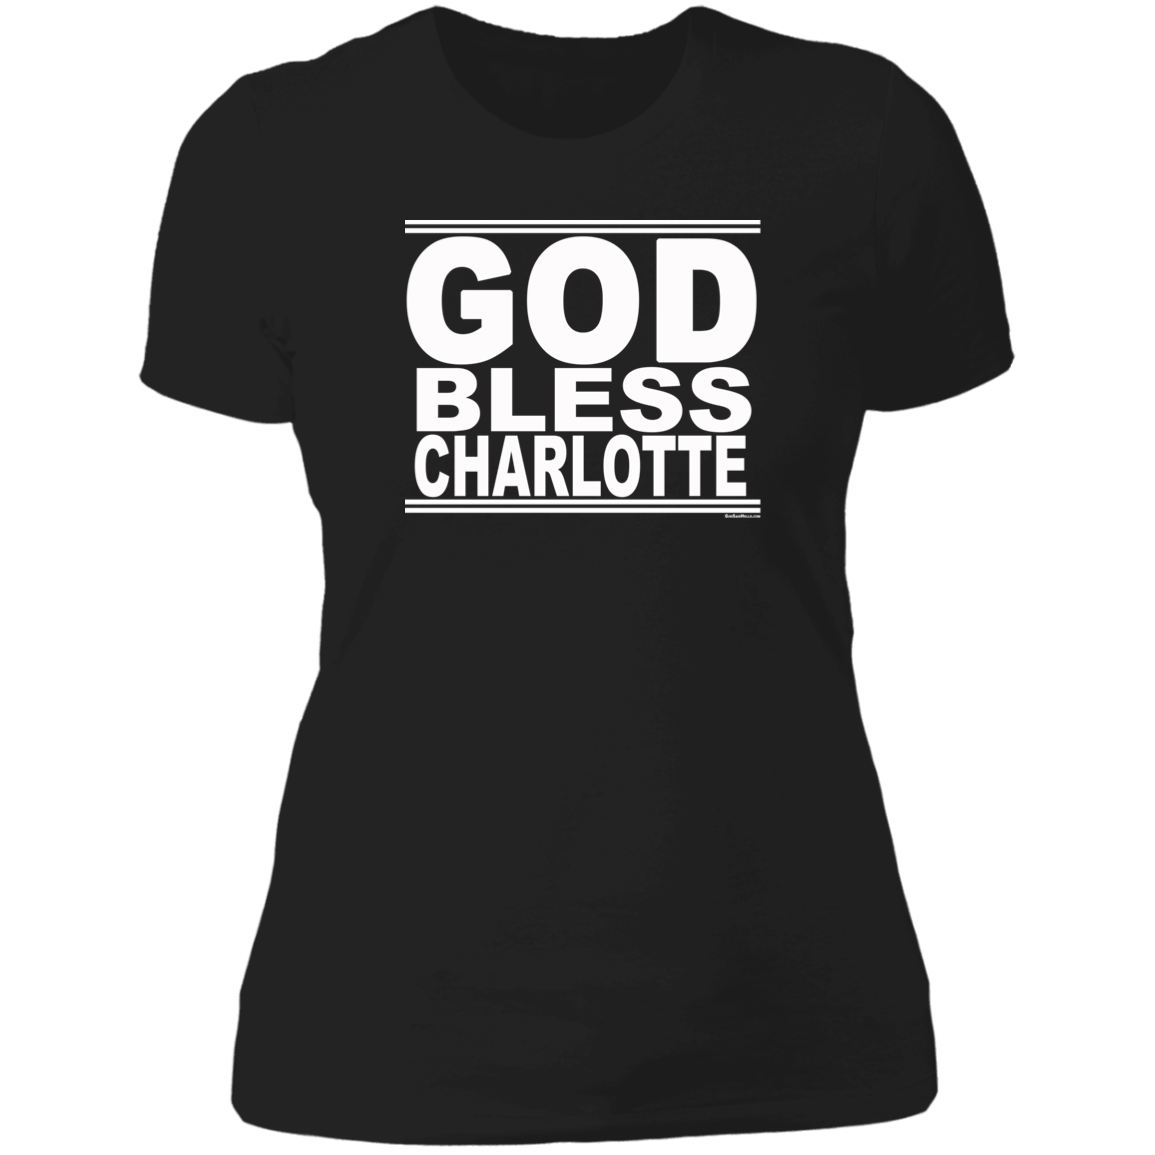 #GodBlessCharlotte - Women's Shortsleeve Tee